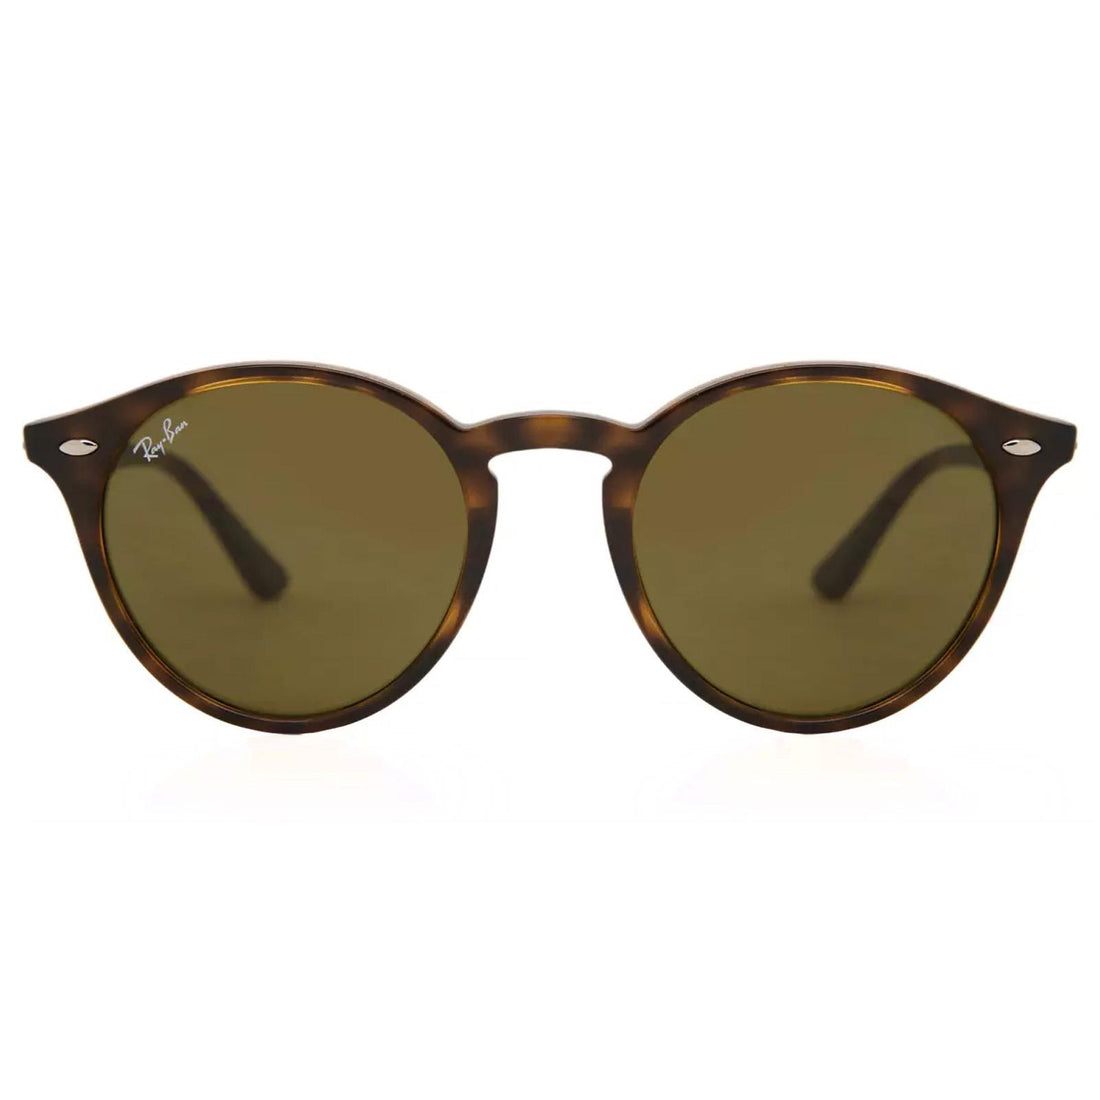 Ray-Ban Sunglasses 2180 710/73 Tortoise Brown B-15